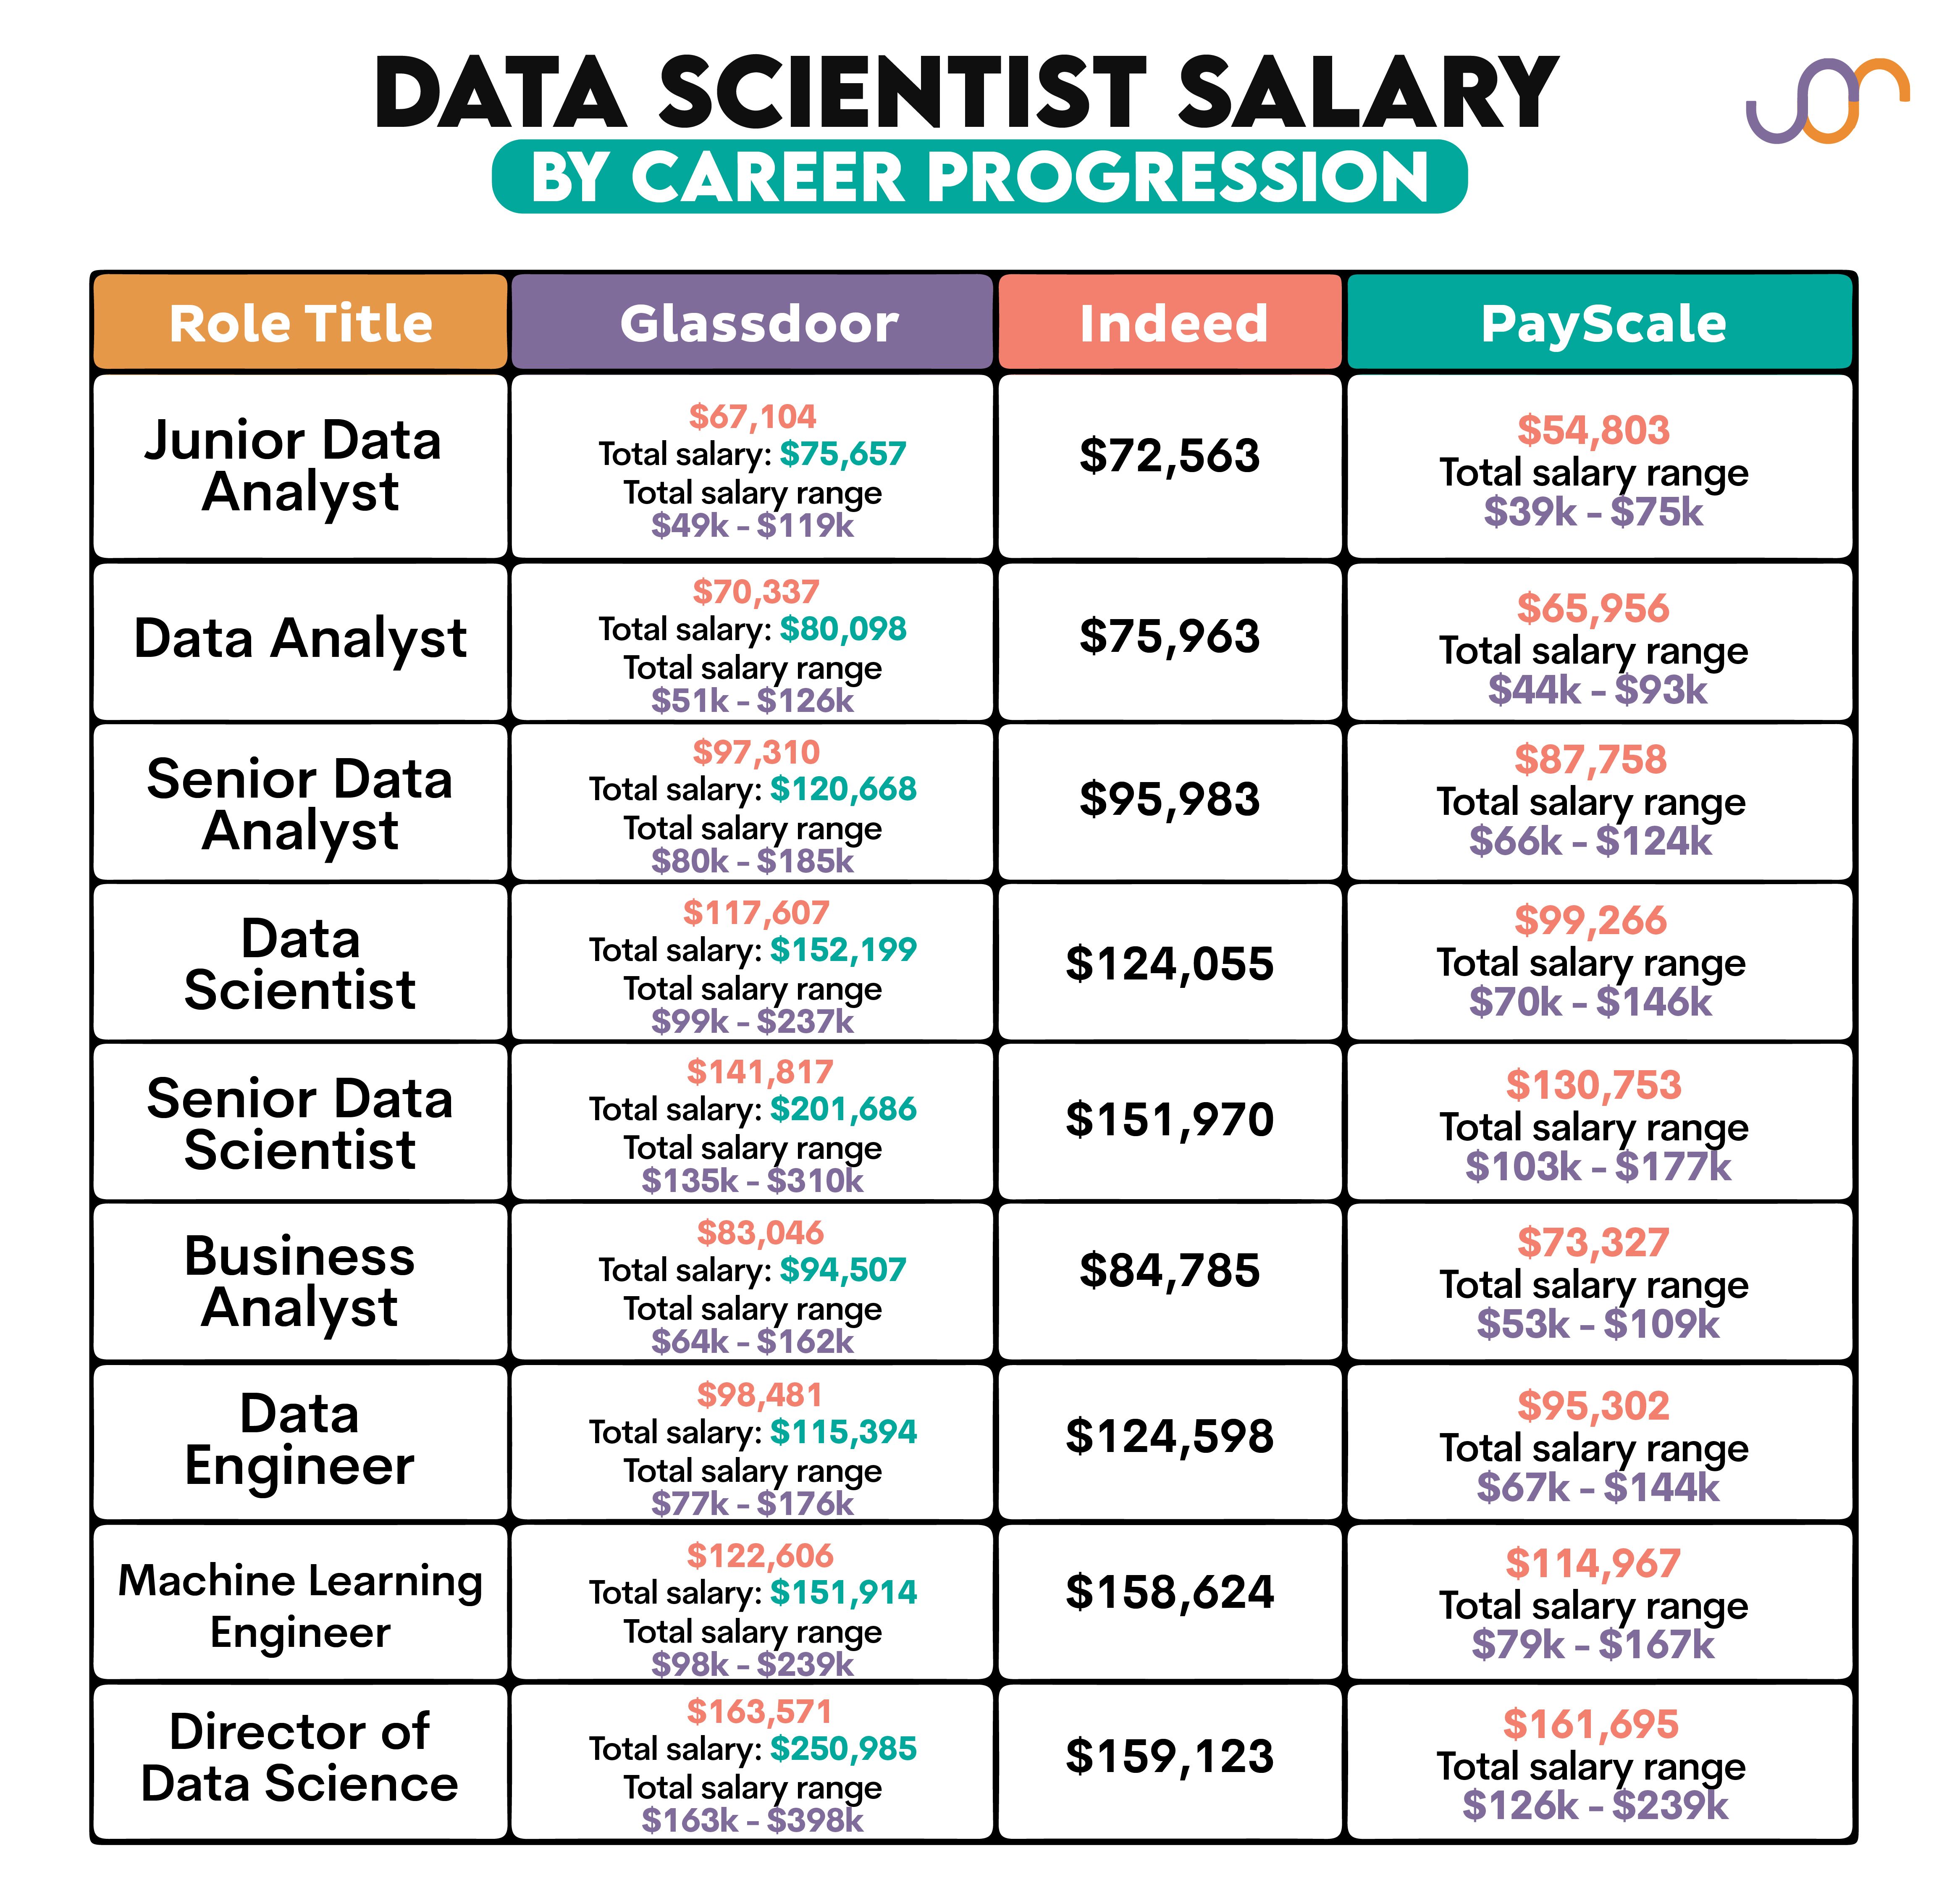 Data Scientist Salary by Career Progression